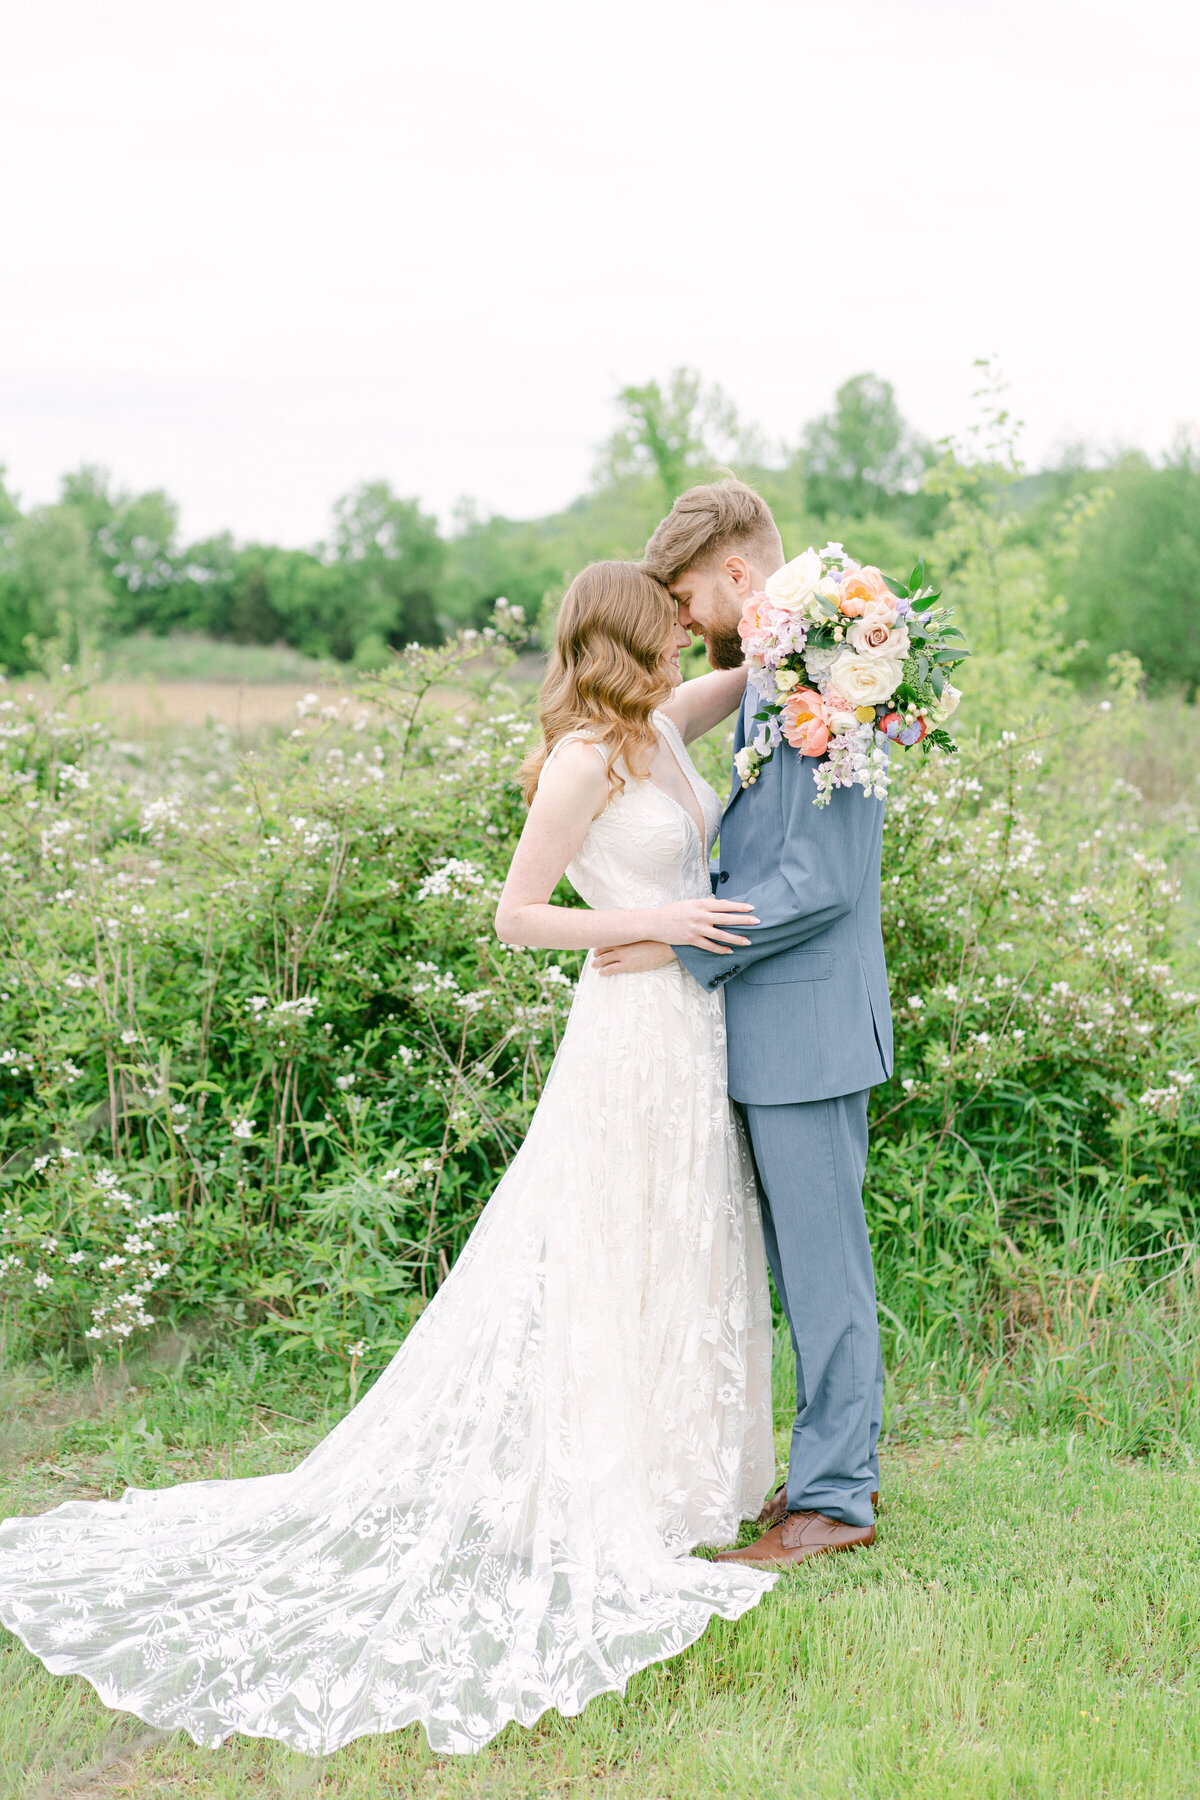 Ava-Vienneau-Nashville-Wedding-Photographer-Southall-Meadows-4